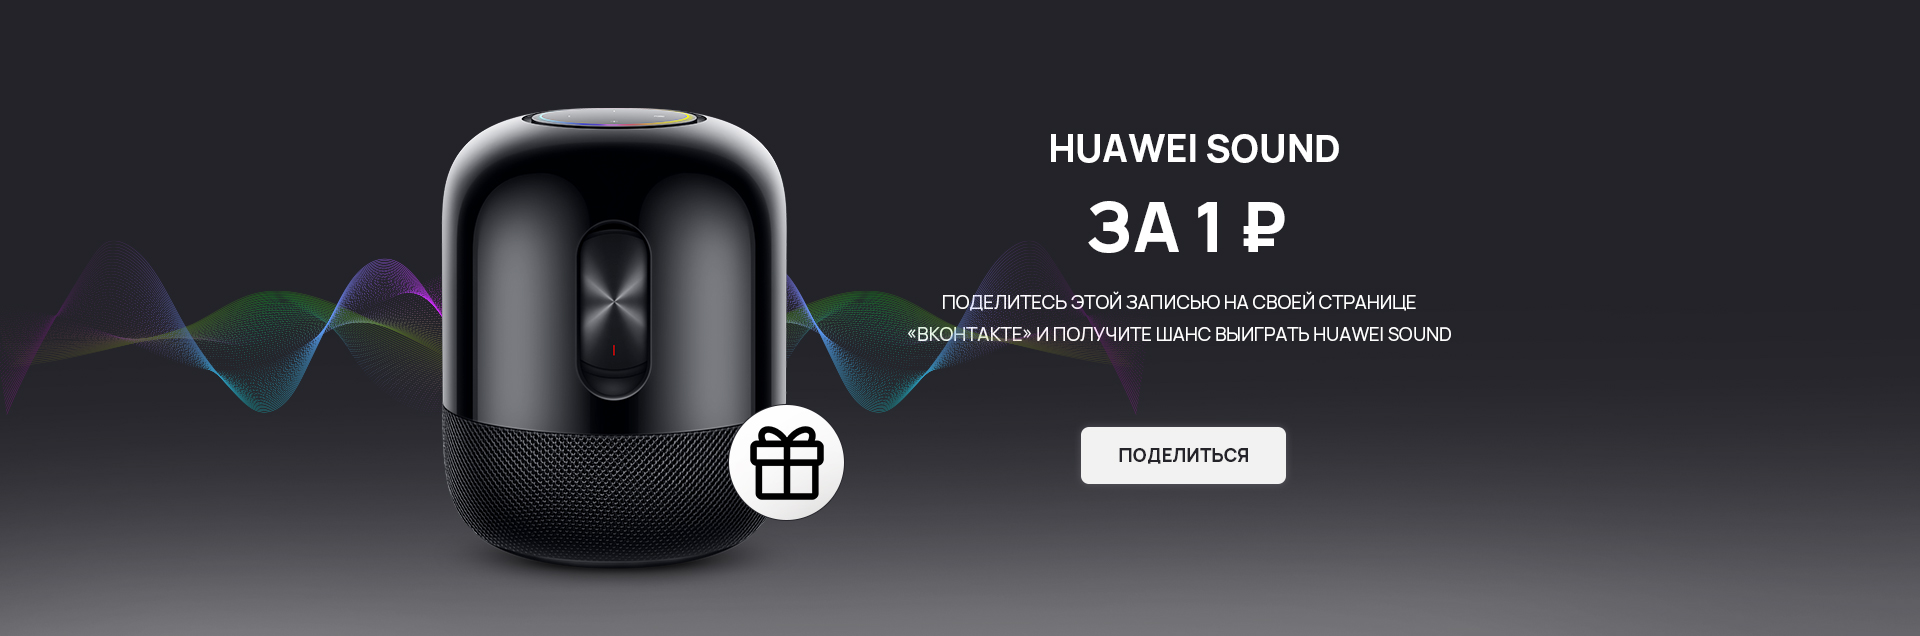 Huawei звук в наушниках